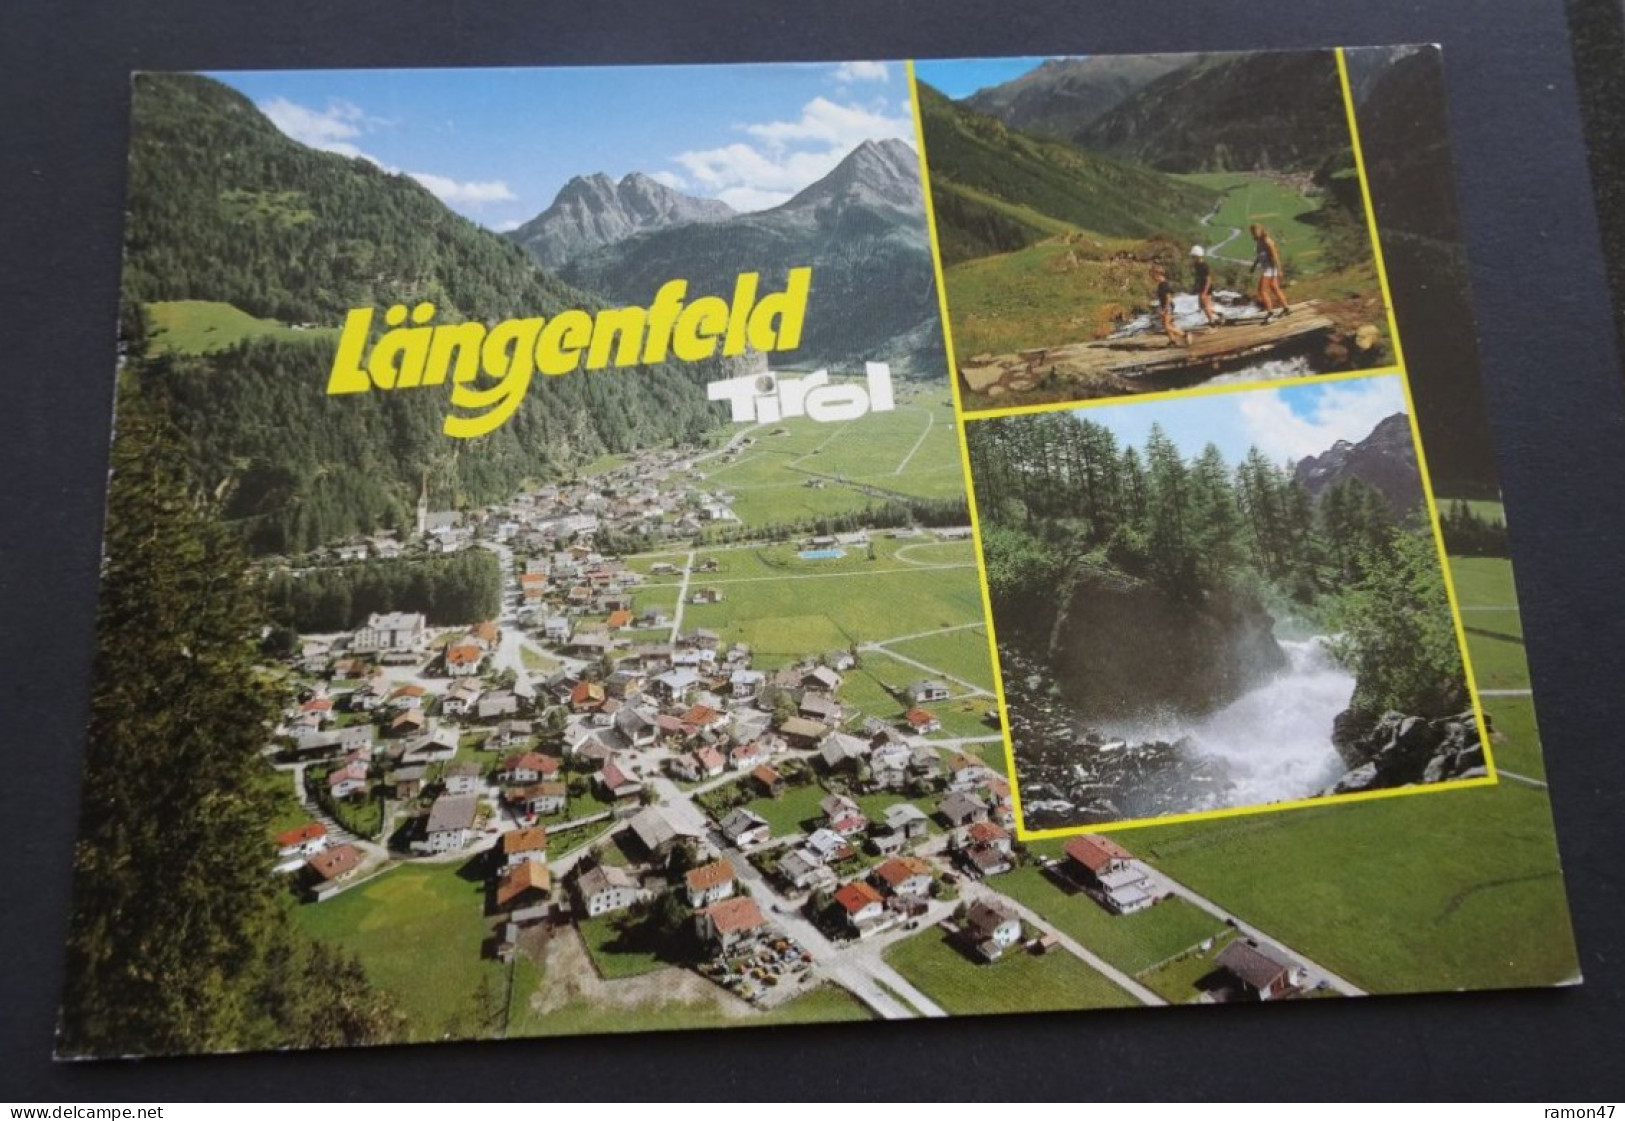 Längenfeld, Oetztal, Tirol - Verlag Werner Lohmann, Obergurgl - Photo Lohmann - # 4/5 - Längenfeld